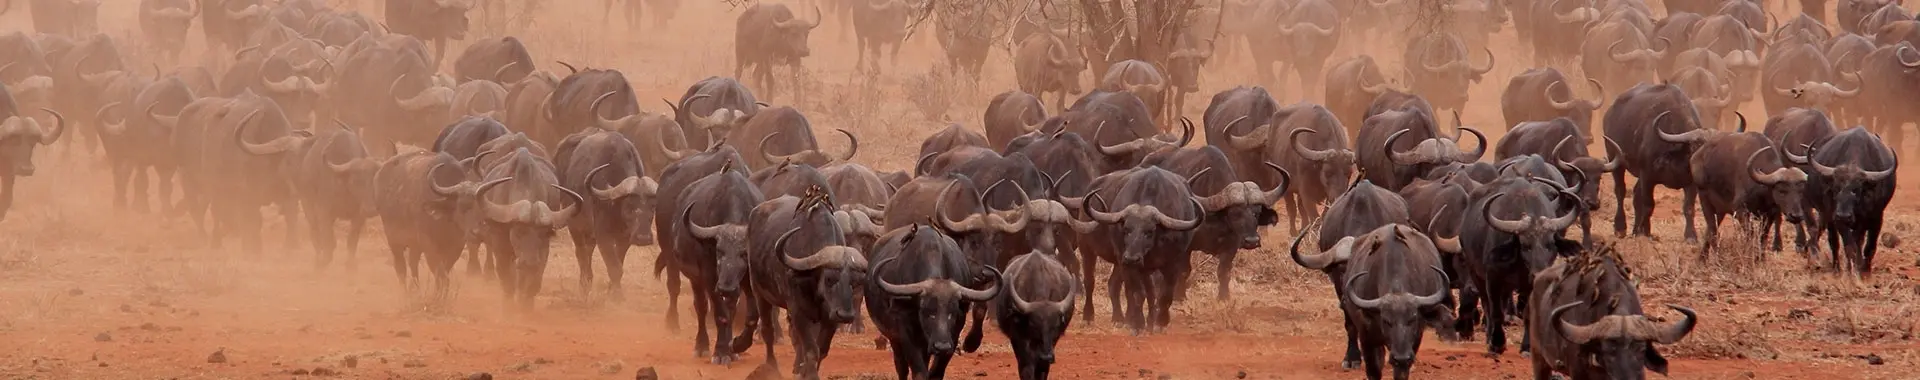 Büffel safari in Tansania